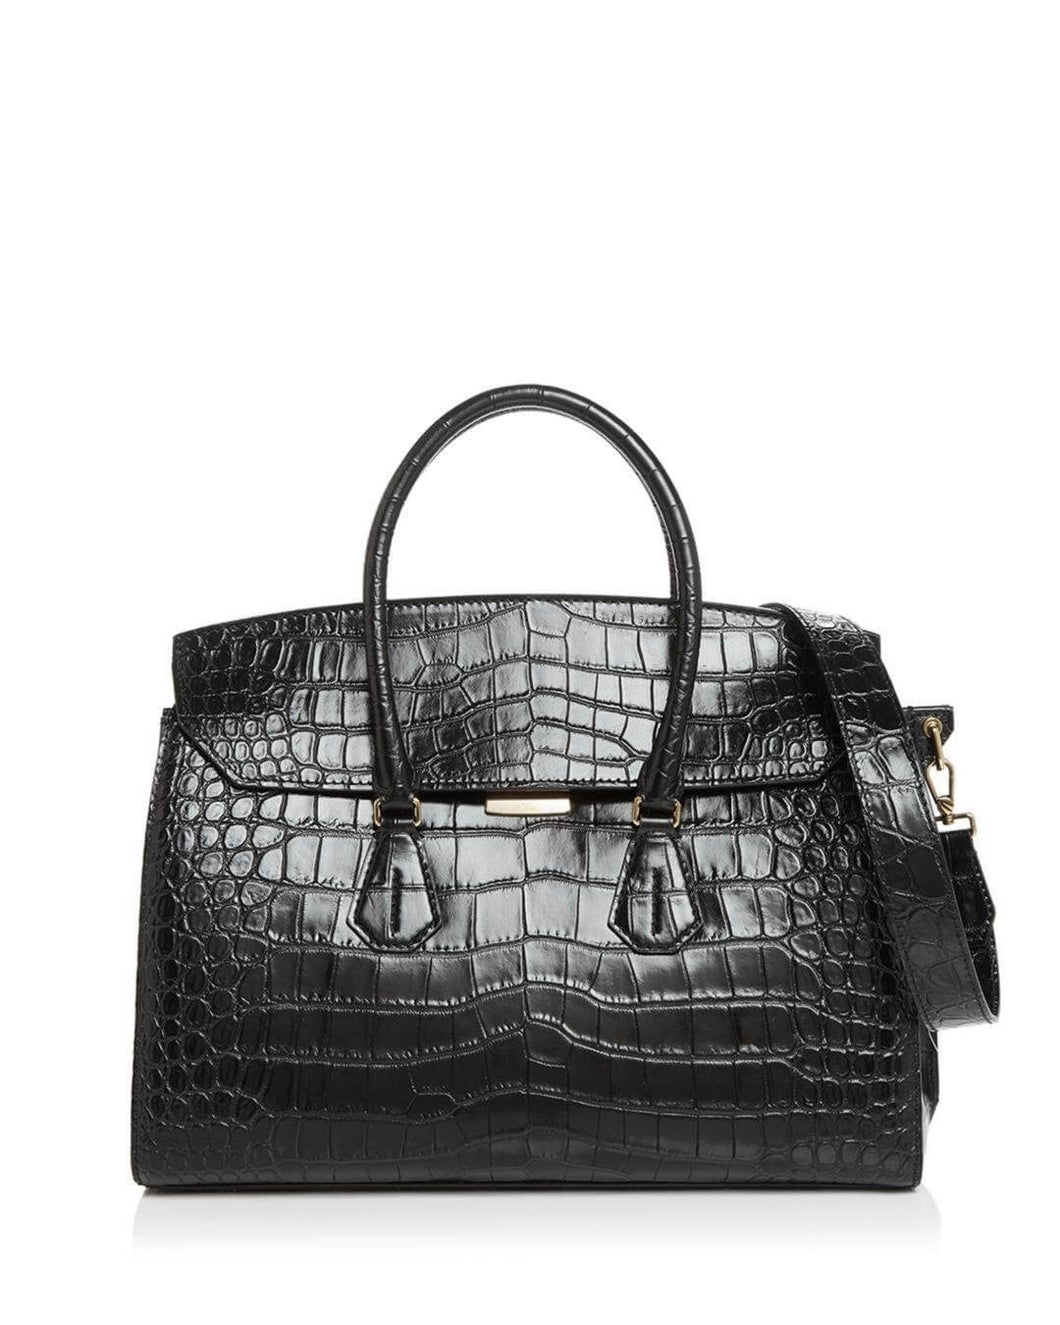 NEW Bally Saphyr Women's 6232676 Black Croc Leather Bag MSRP $1870